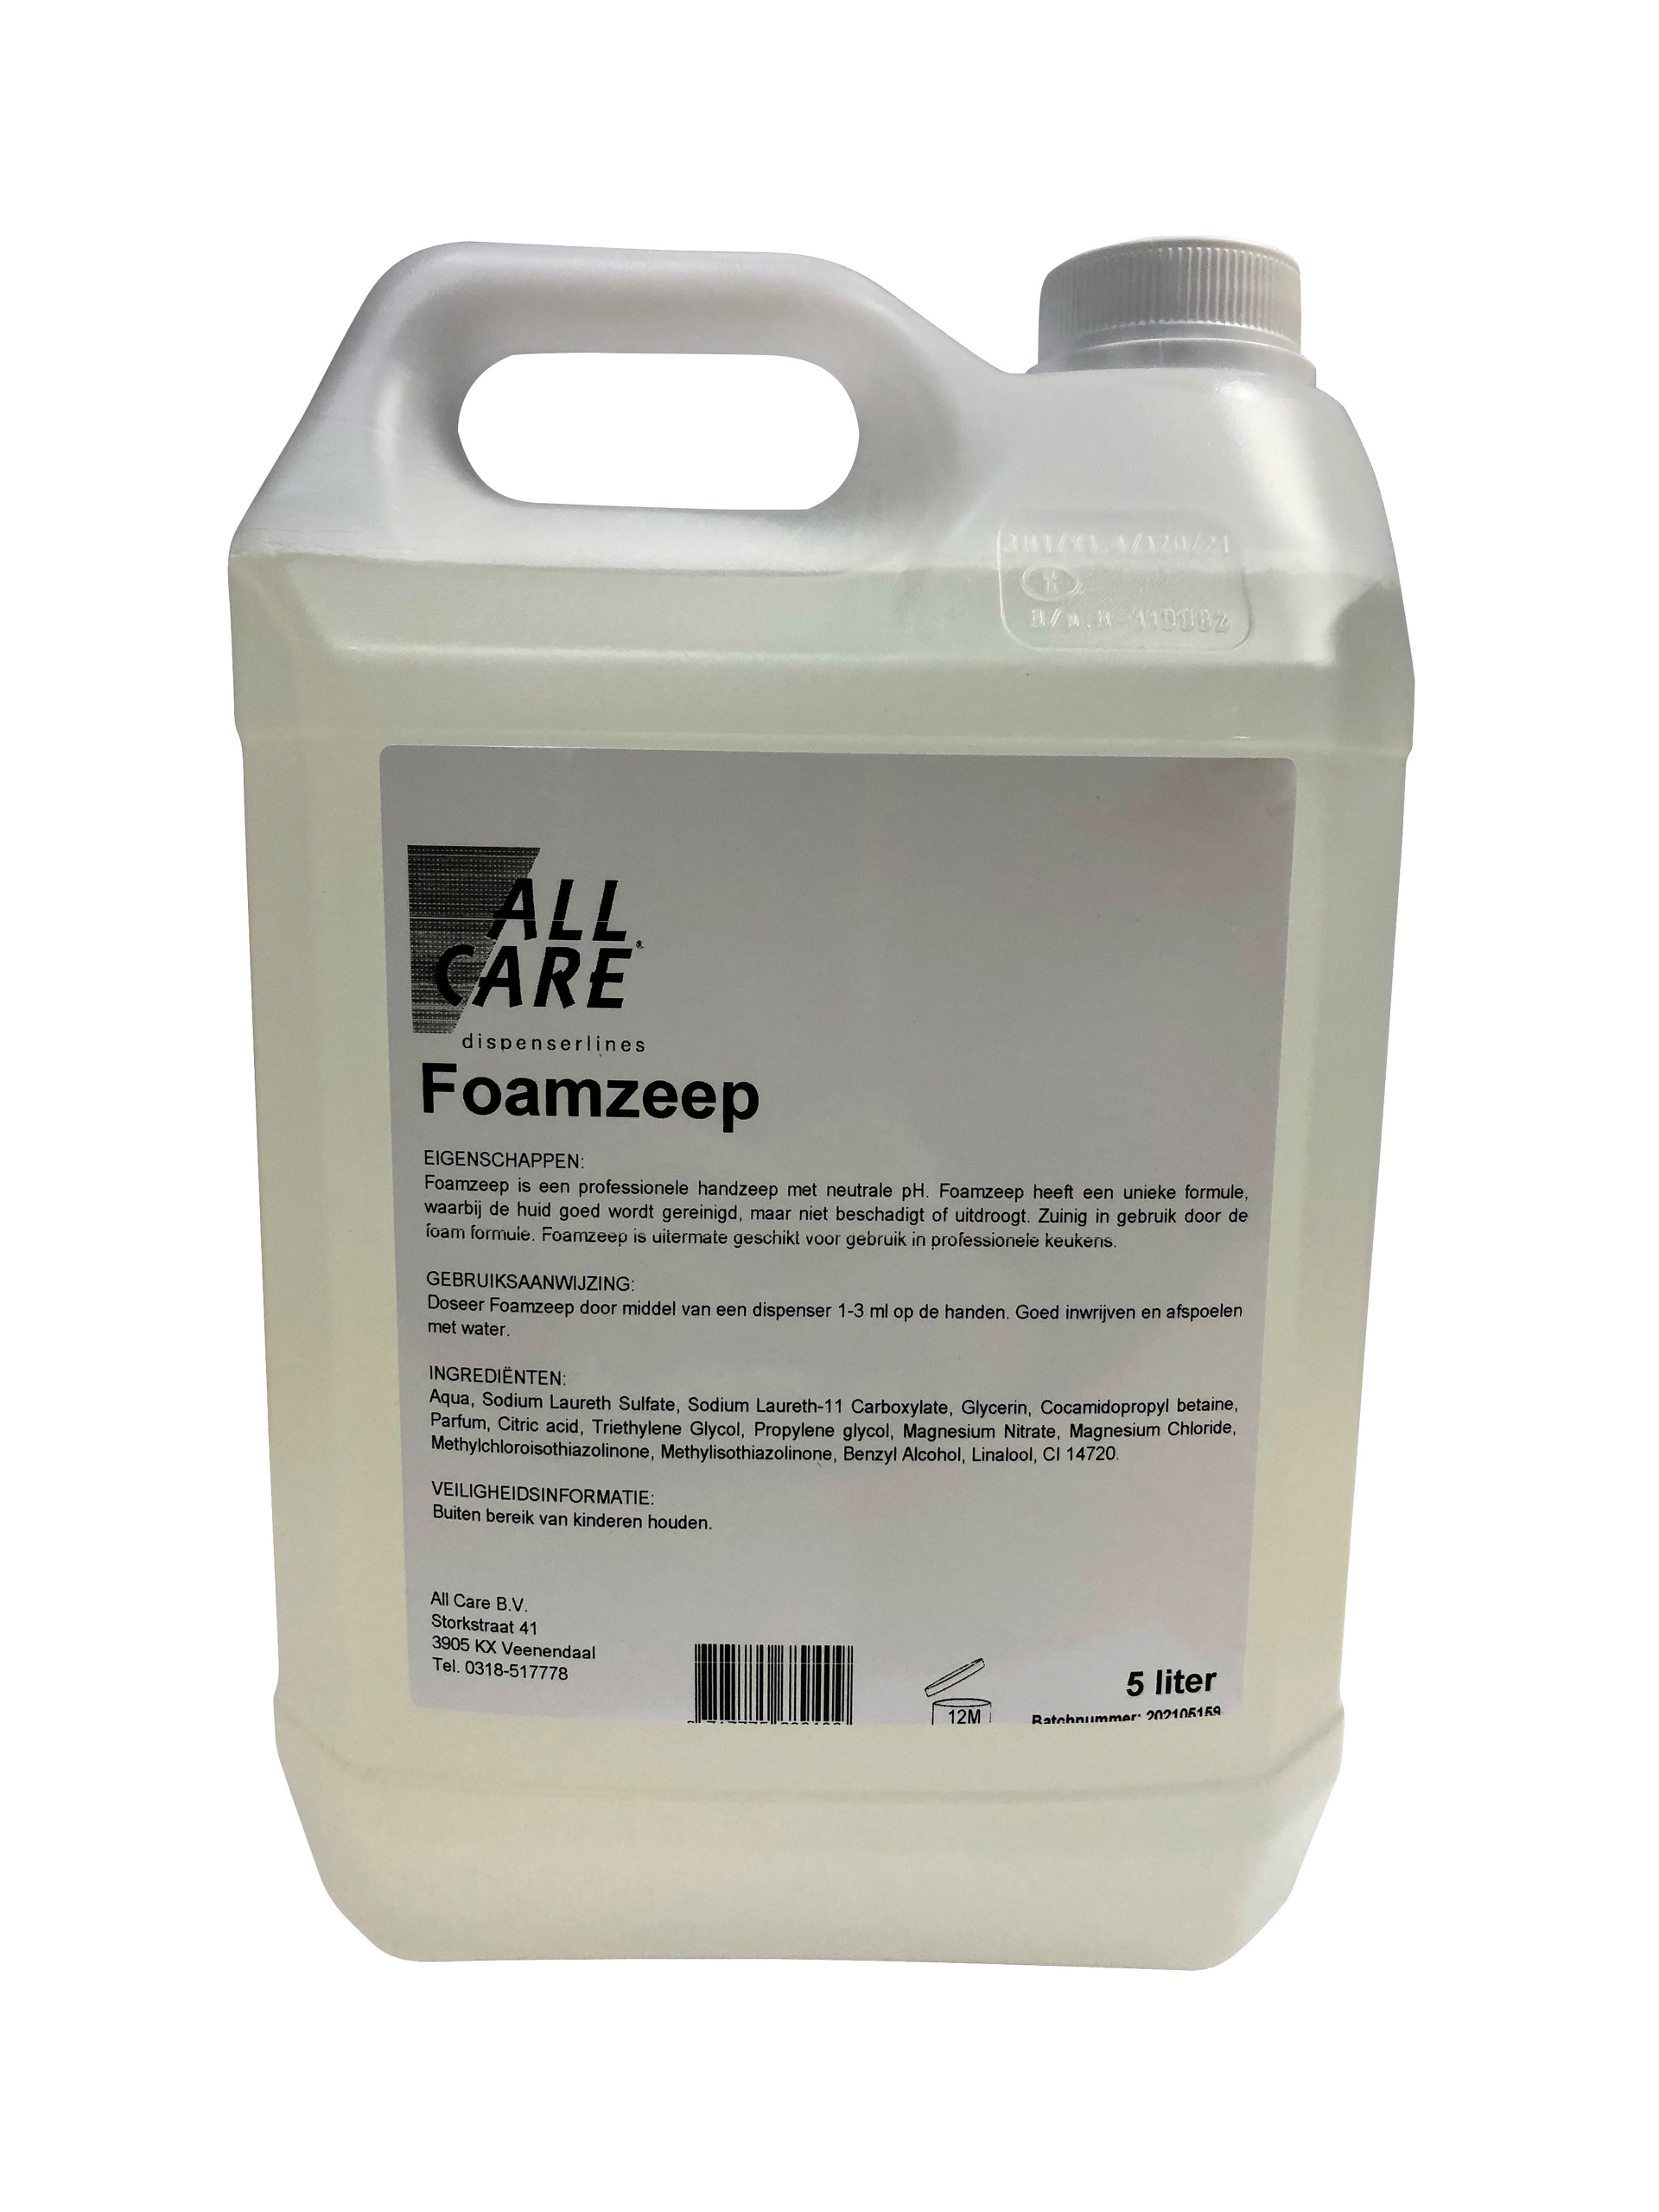 Foamzeep 5 liter can 